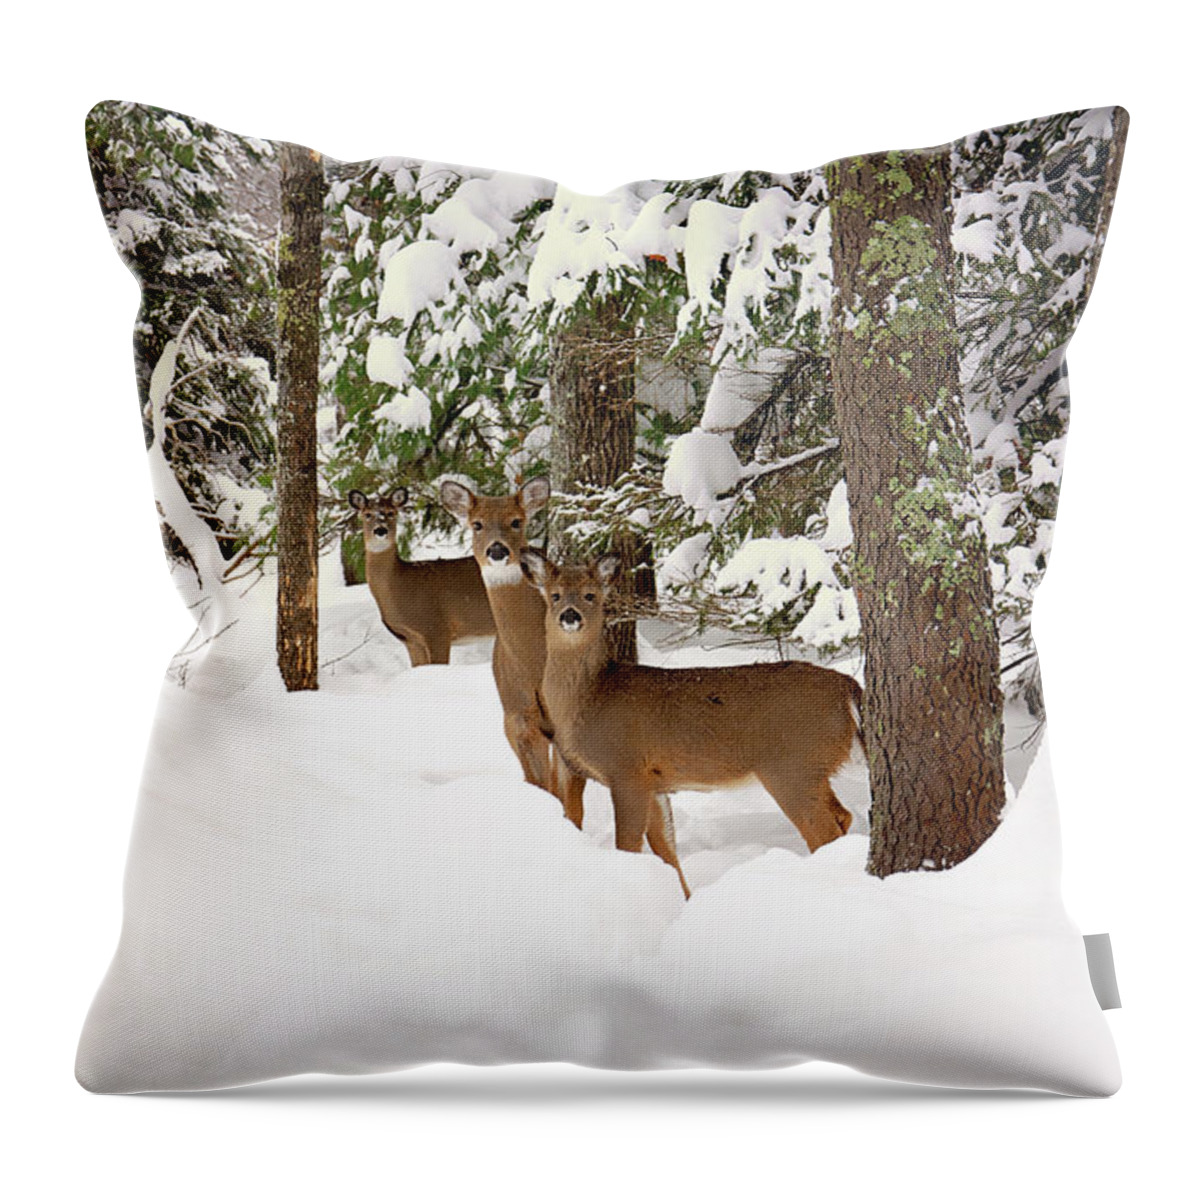 Winter Deer In The Woods Throw Pillow featuring the photograph Winter Deer in the Woods by Gwen Gibson